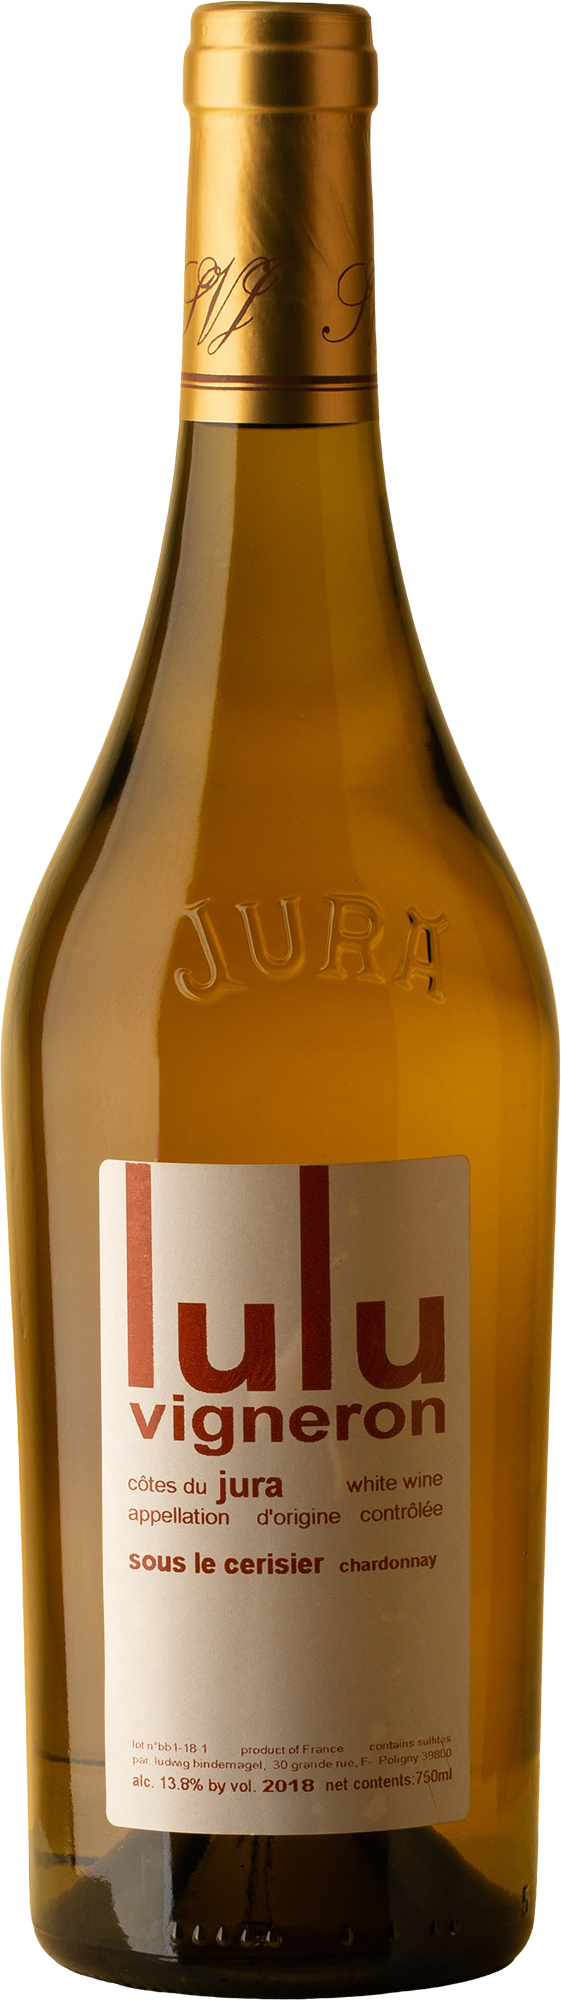 Lulu Vigneron - Sous le Cerisier Chardonnay 2018 White Wine